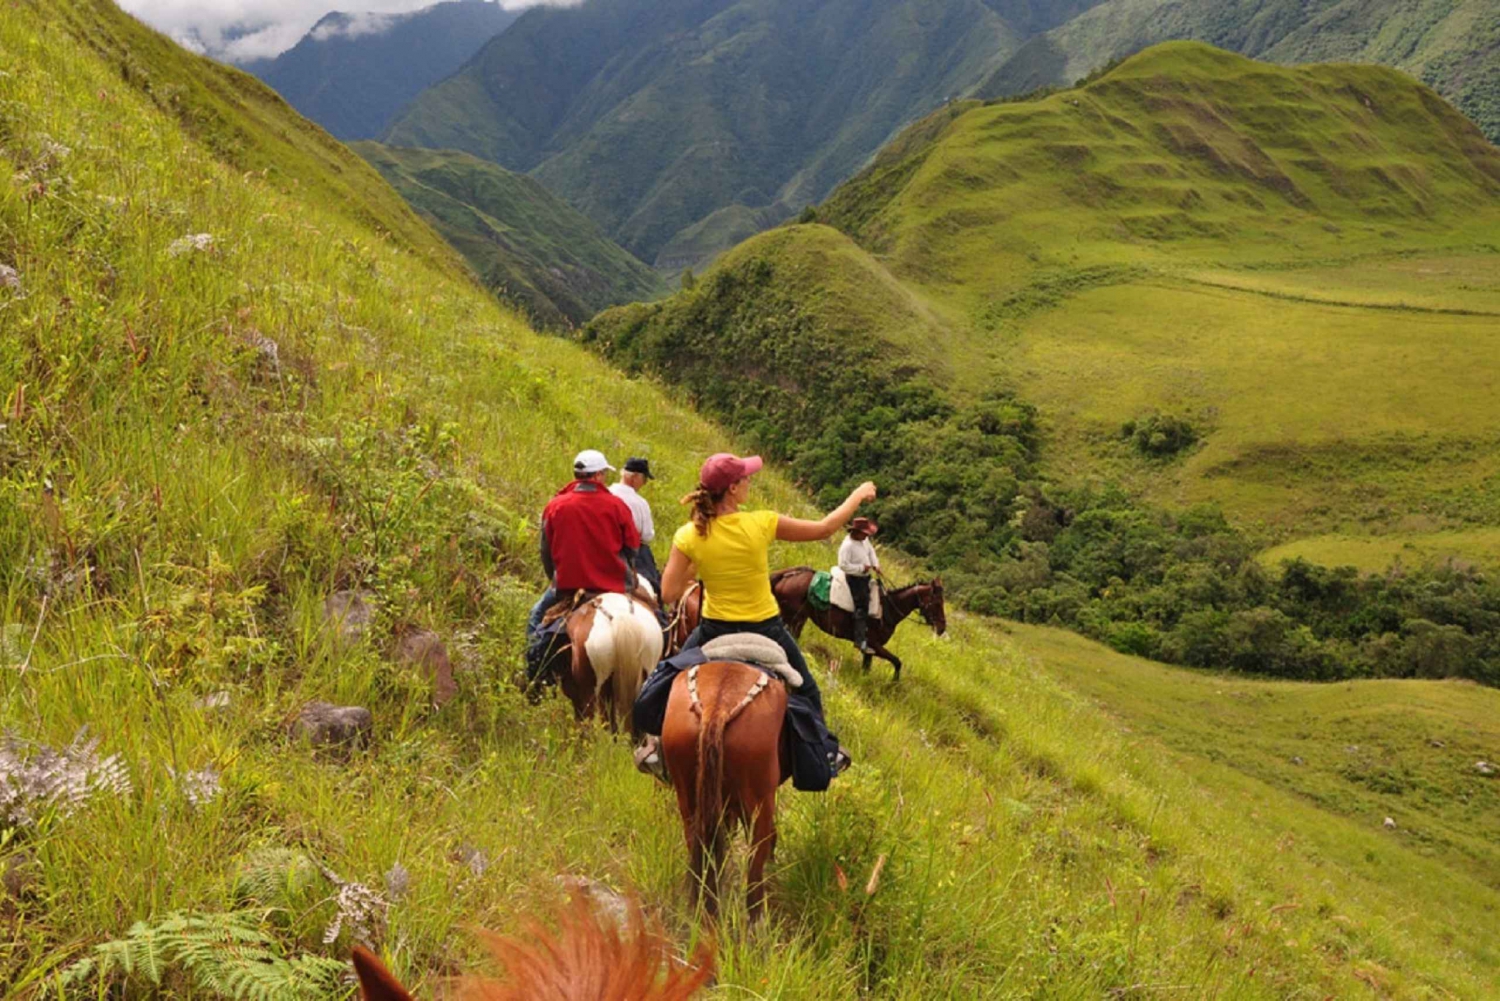 Mitad del Mundo & Horseback Ride at Pululahua Volcano